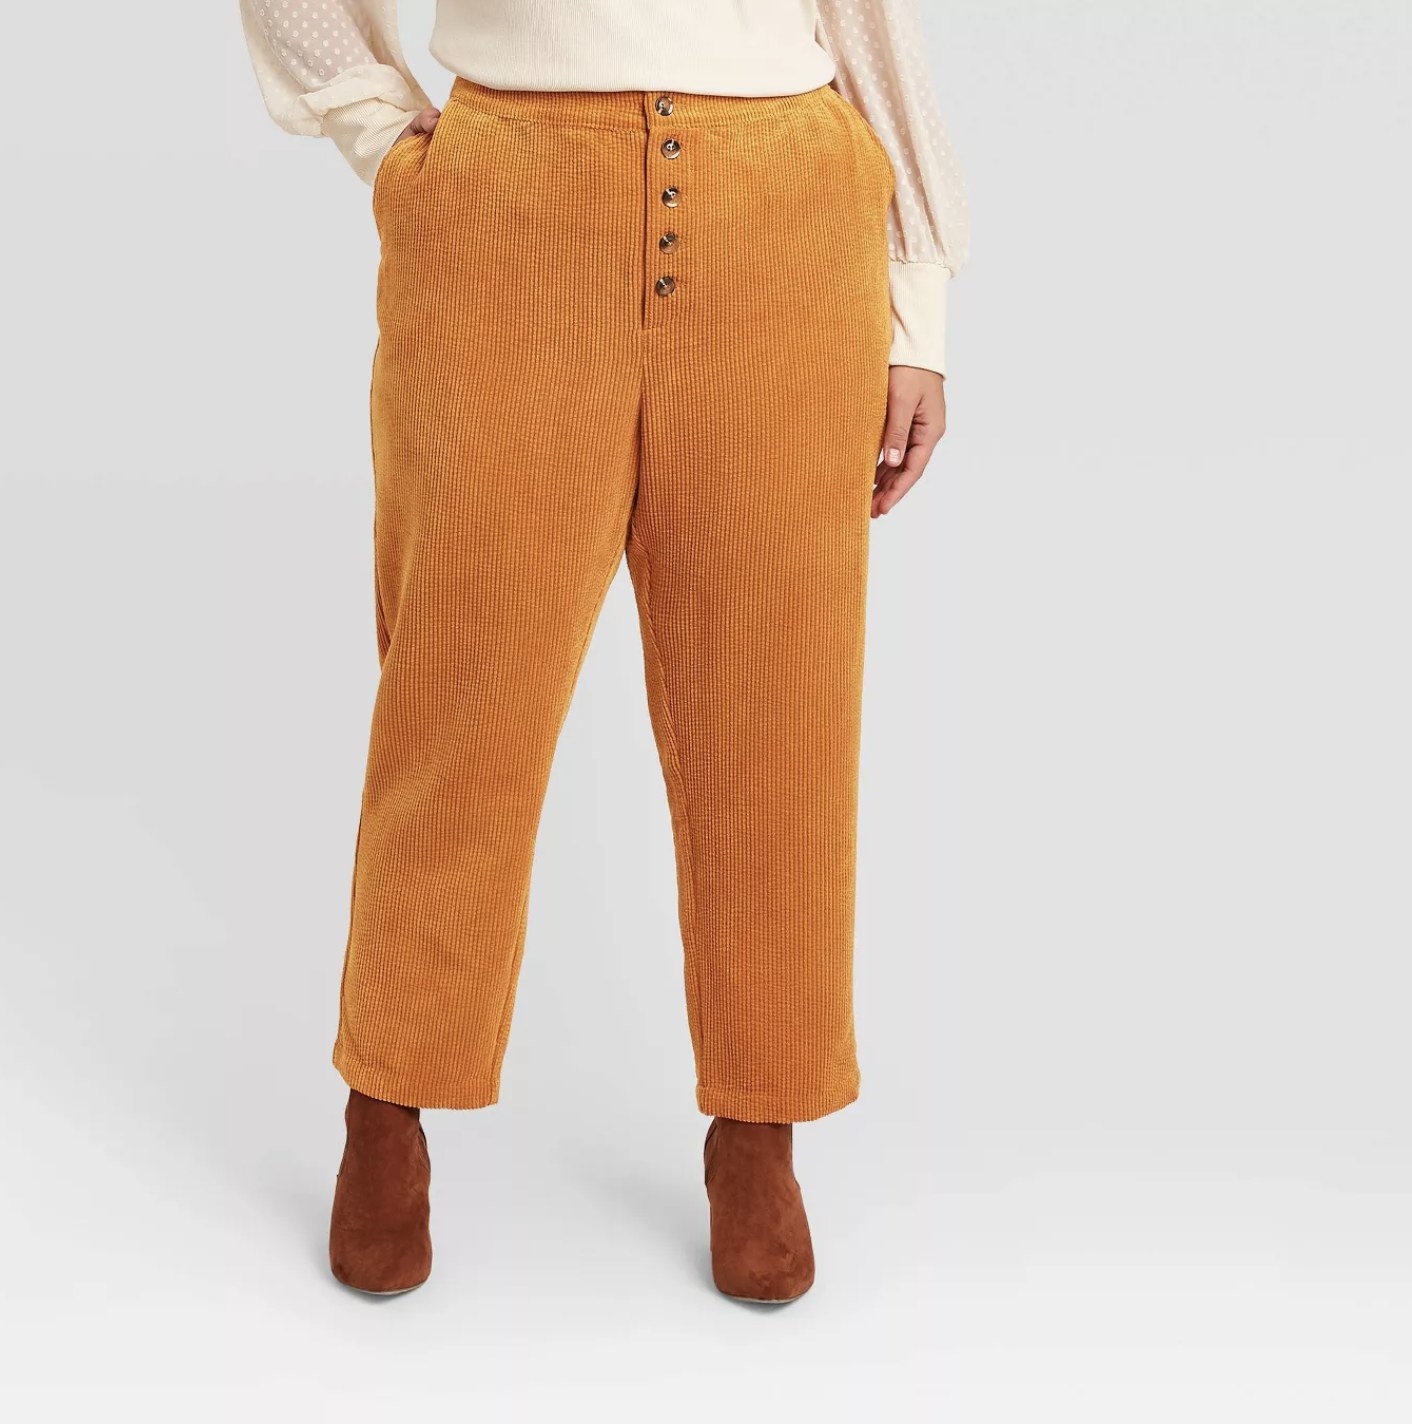 Model is wearing orange corduroy pants